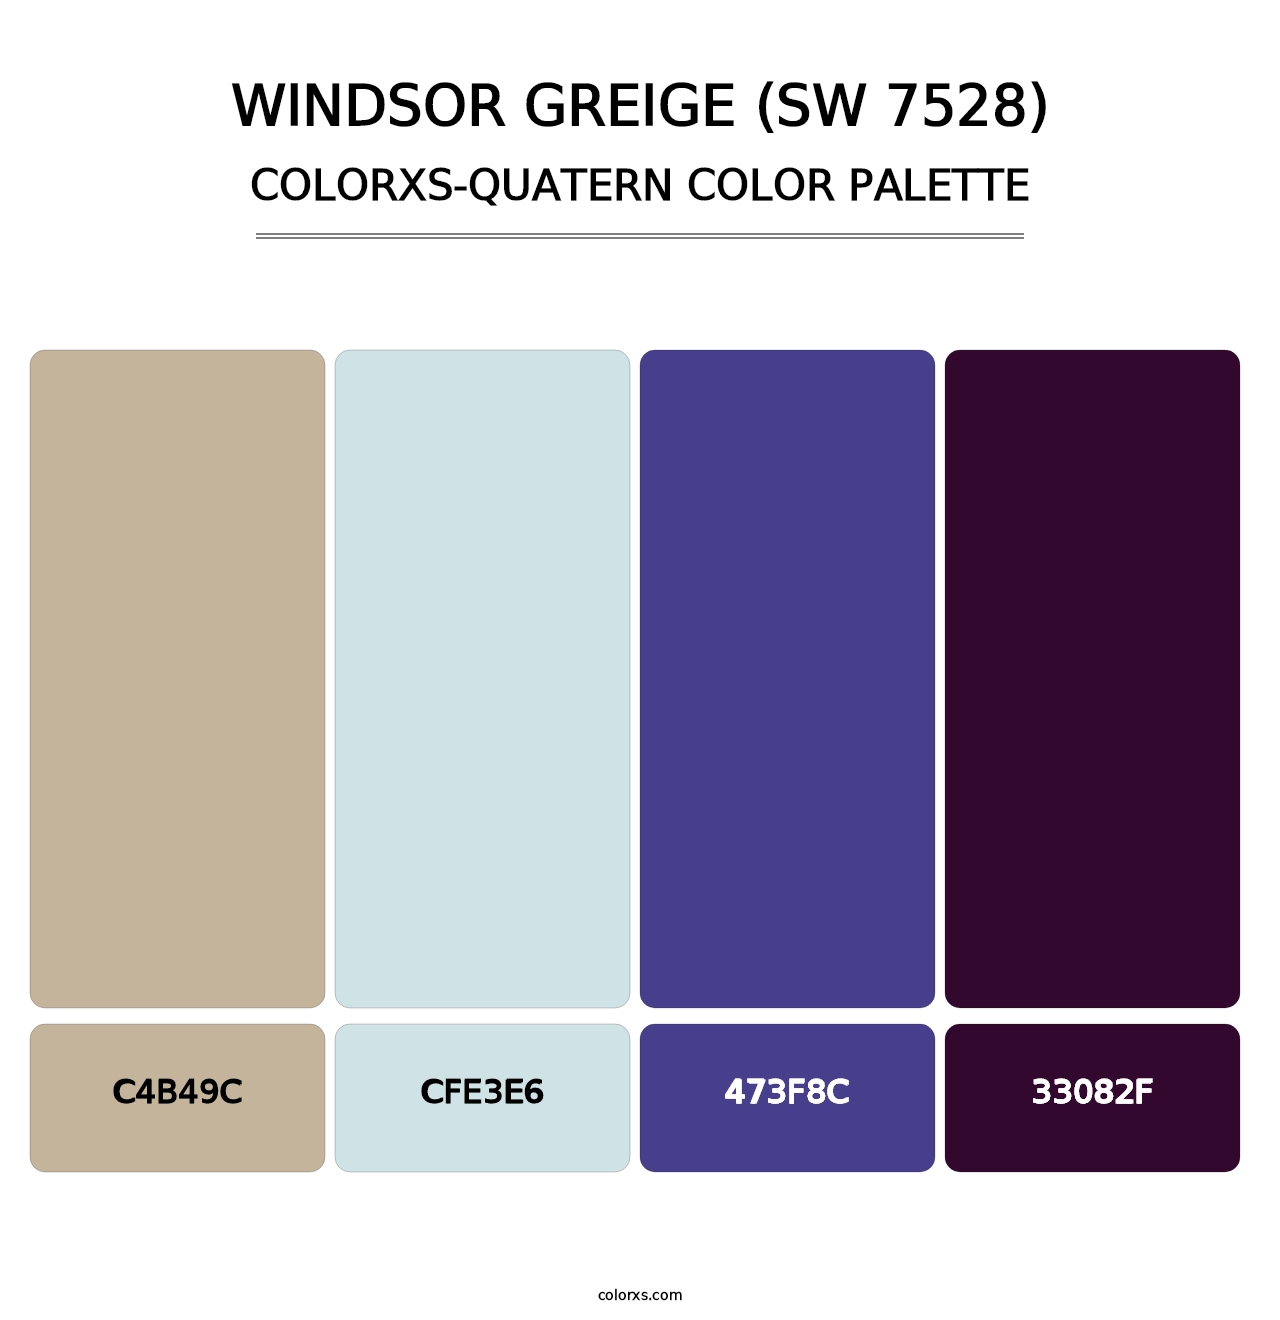 Windsor Greige (SW 7528) - Colorxs Quatern Palette